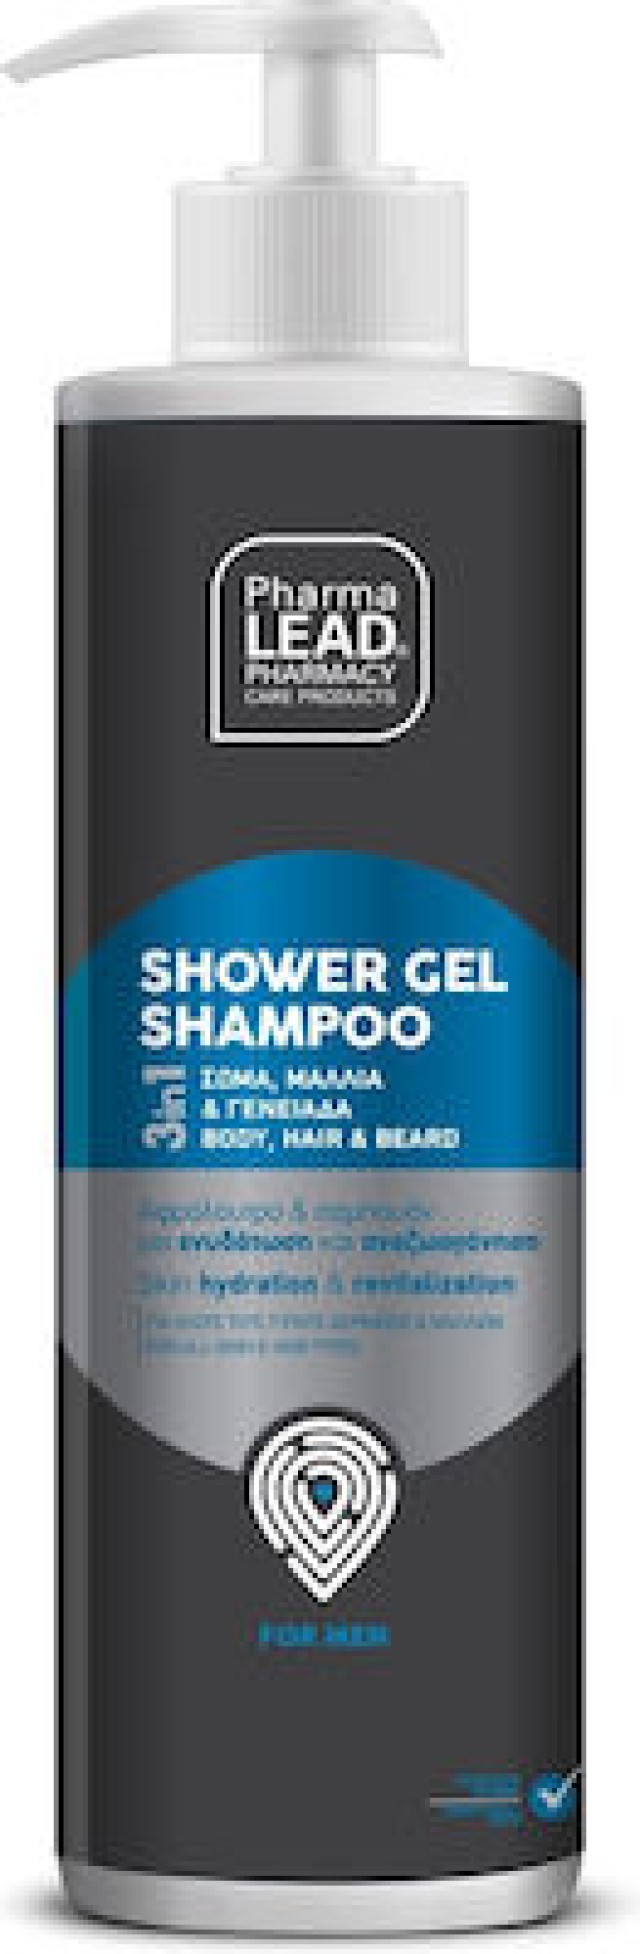 Pharmalead Men Shower Gel Shampoo 3in1 για Σώμα, Μαλλιά & Γενειάδα, 500ml